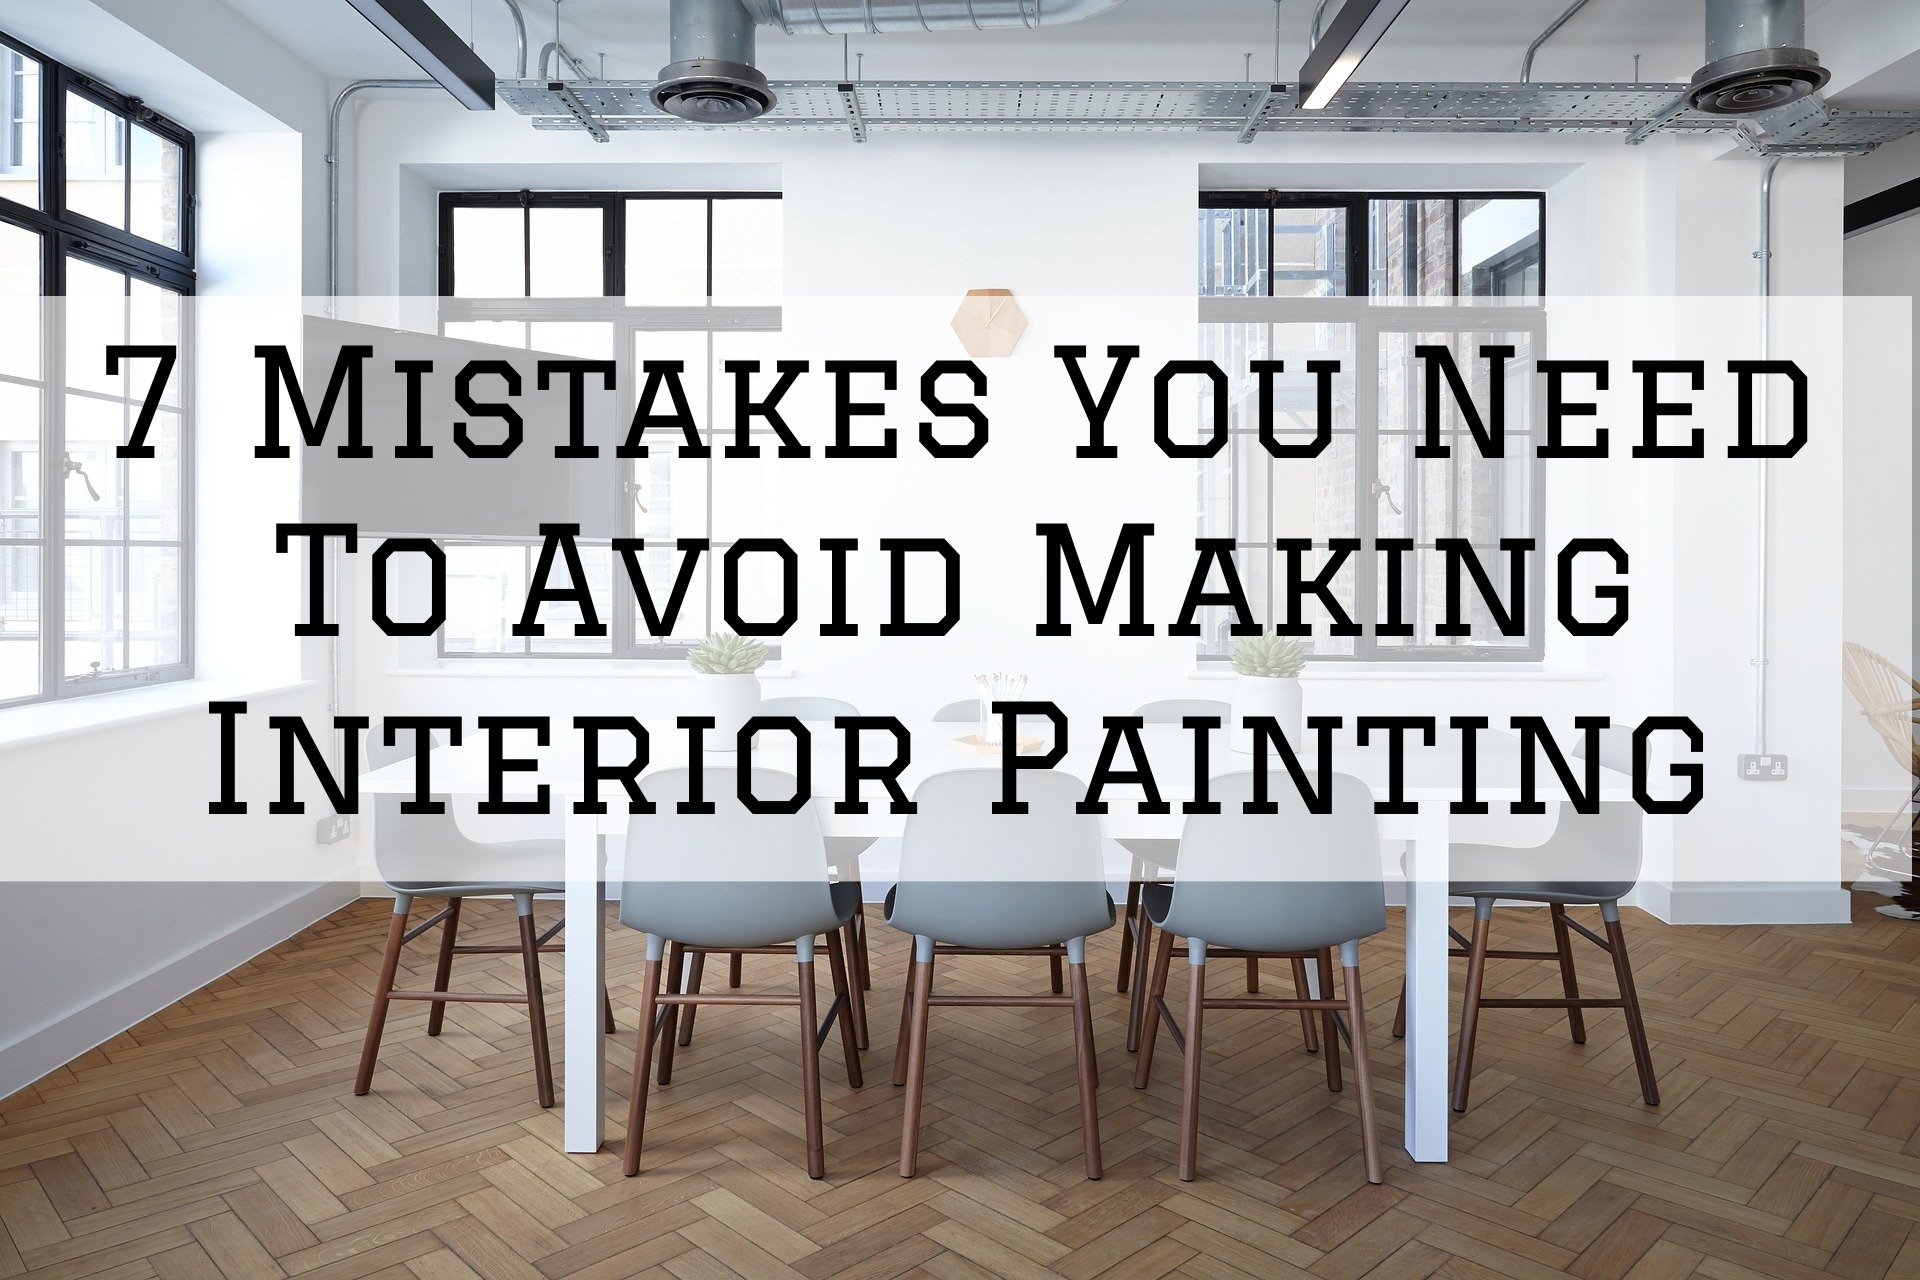 2021-01-06 Image Painting Inc Arlington VA Avoid Interior Mistakes